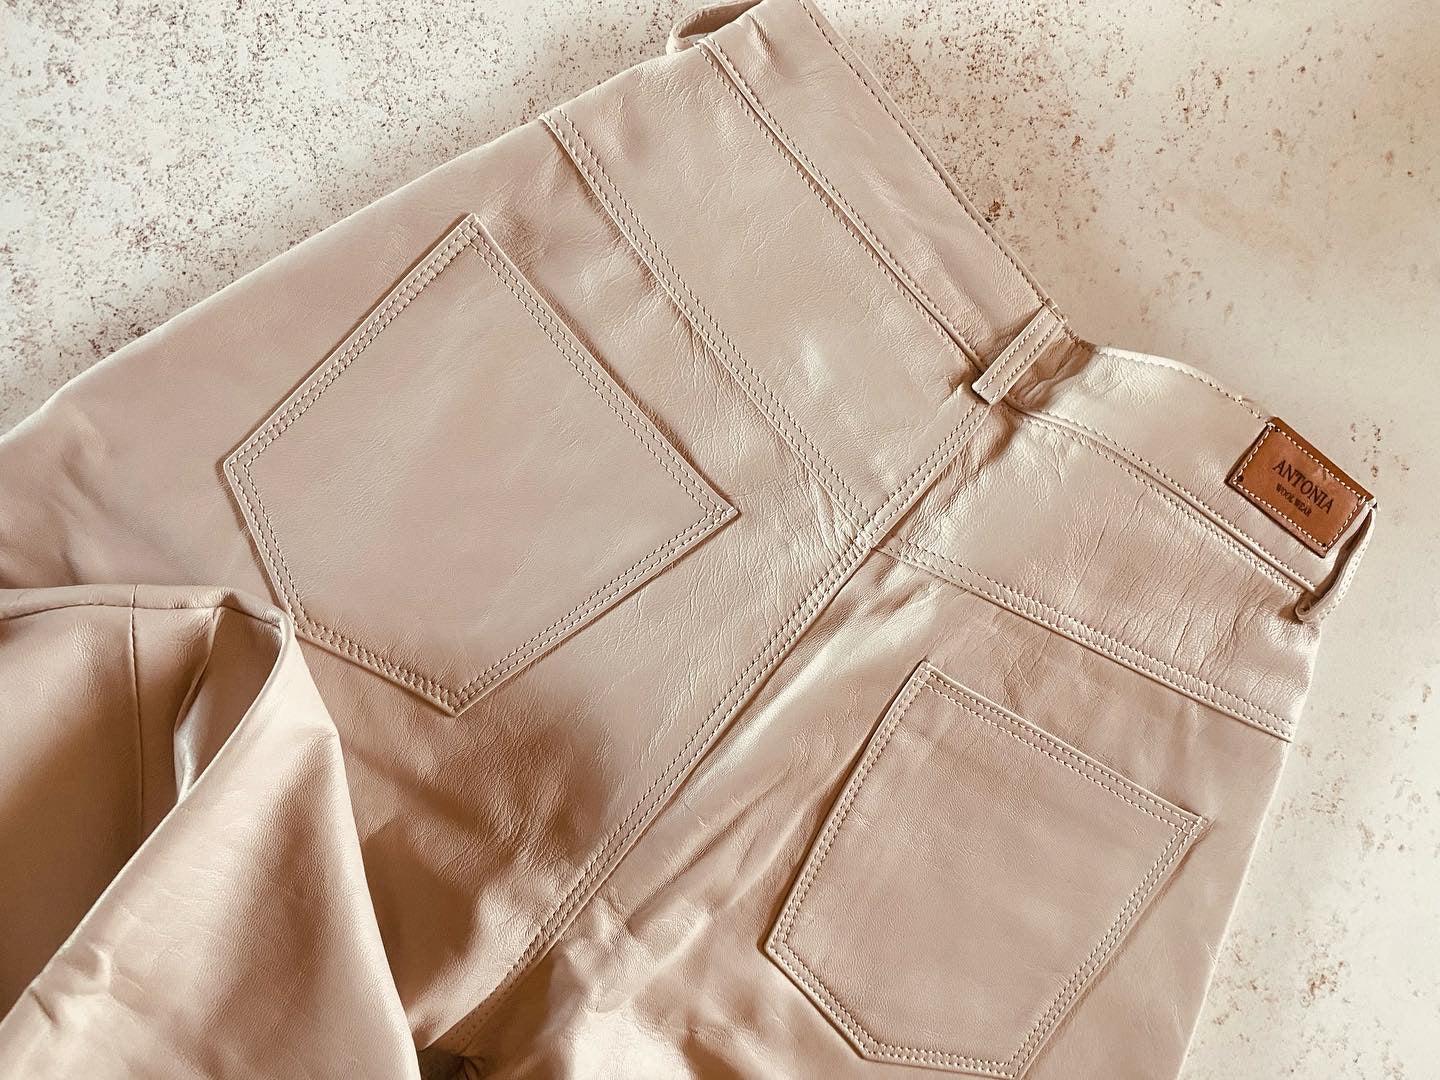 Pantaón Cuero - Slouchy Leather Pant Nude beige xs